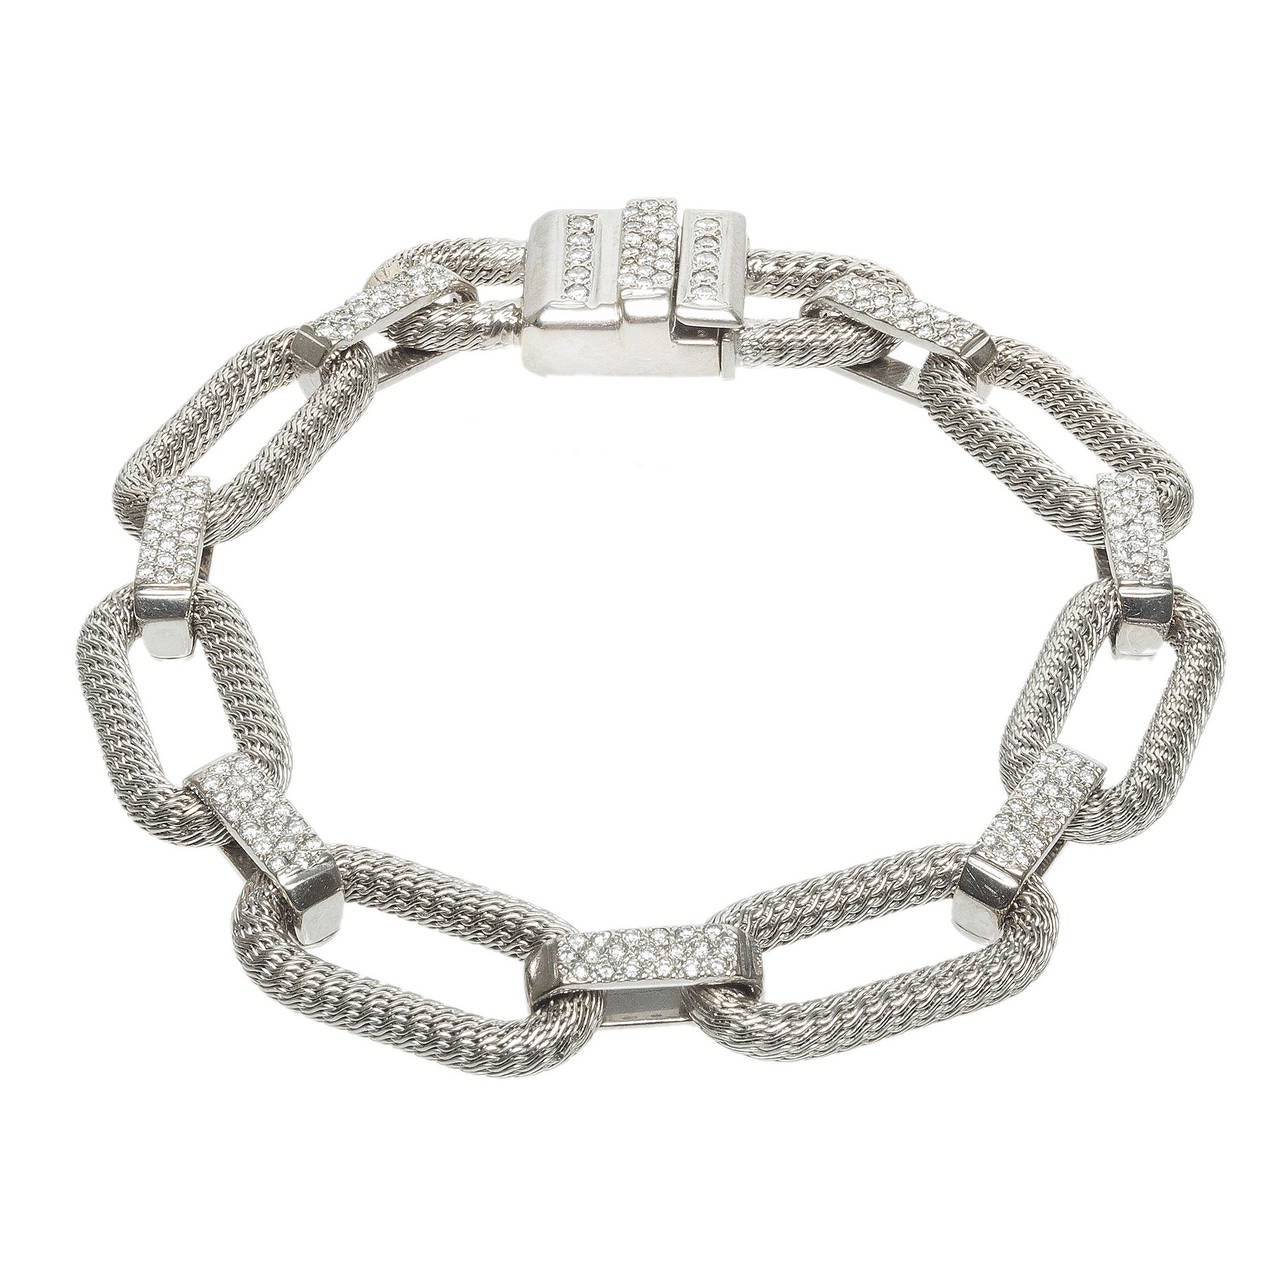 1.73 Carat Diamond White Gold Braided Link Bracelet